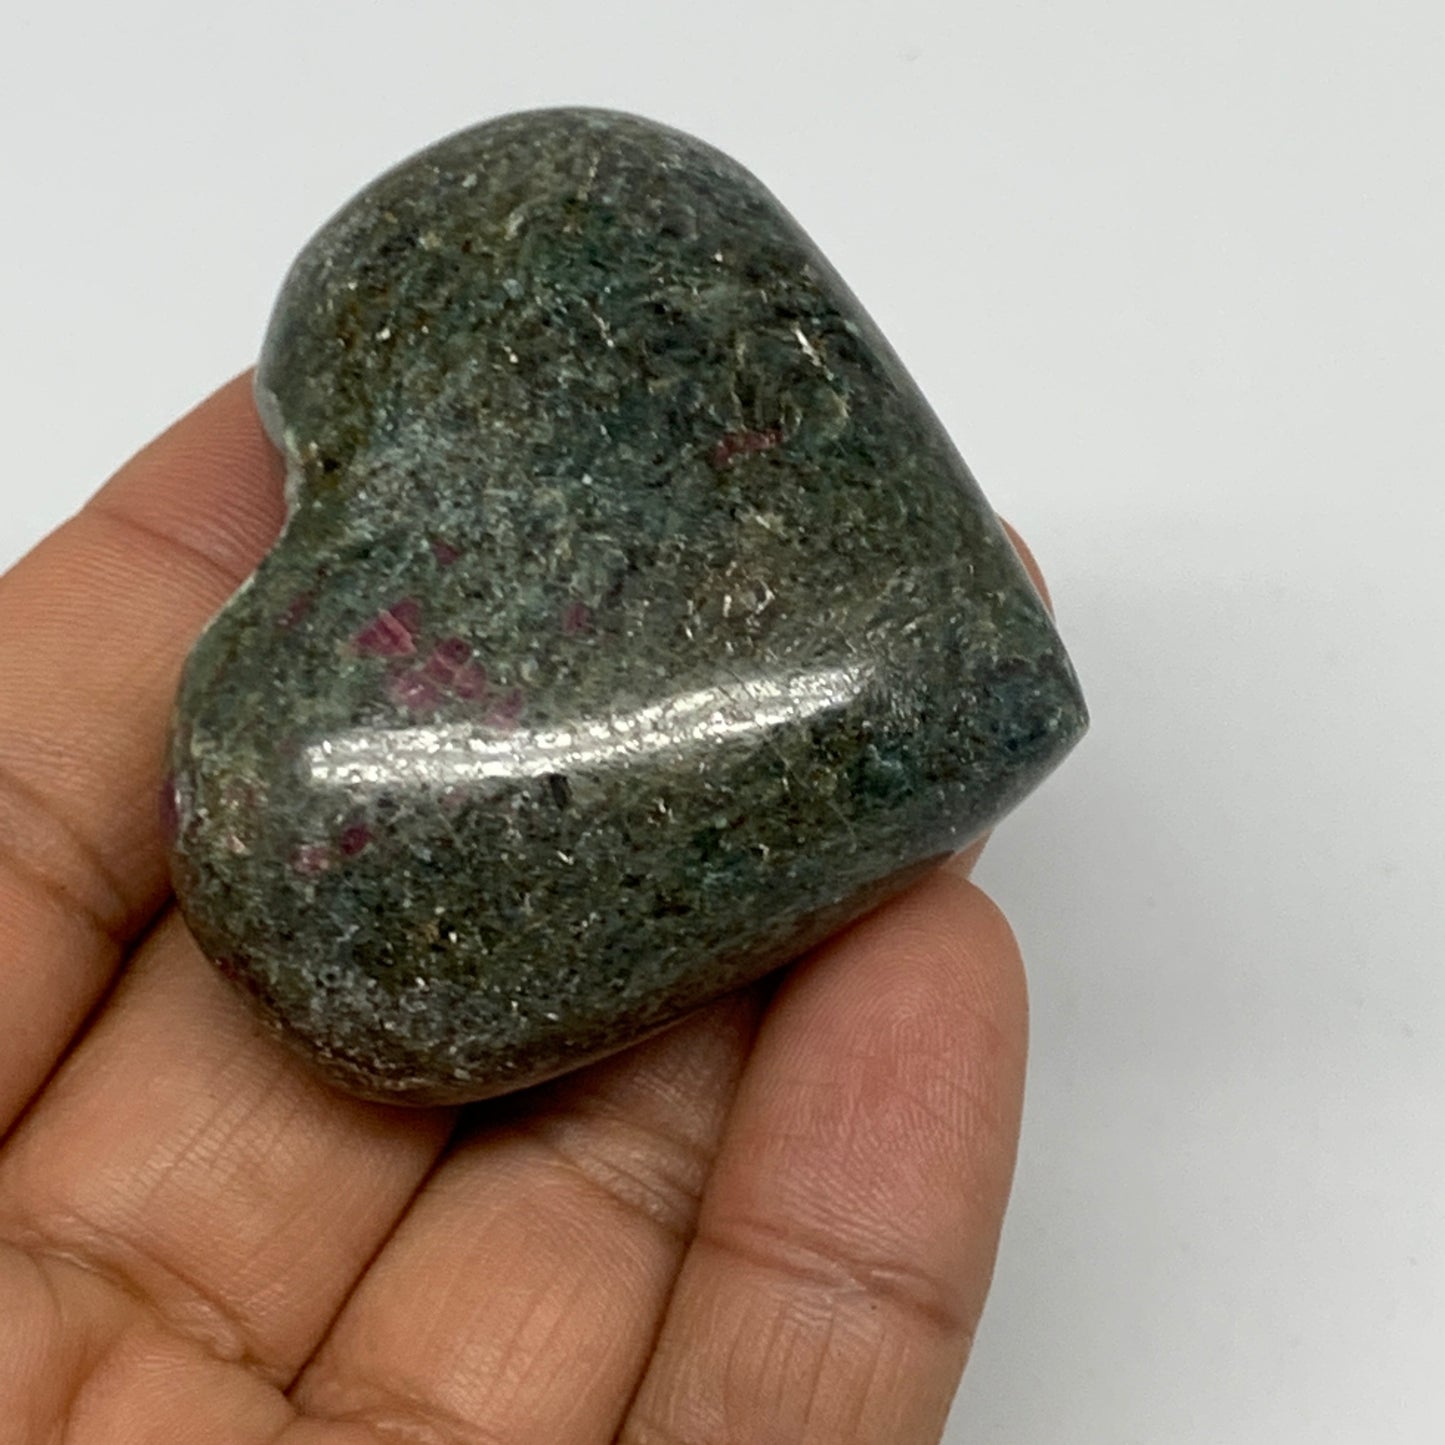 90.3g, 1.7"x2.1"x0.9", Ruby Kyanite Heart Small Polished Healing Crystal, B22069